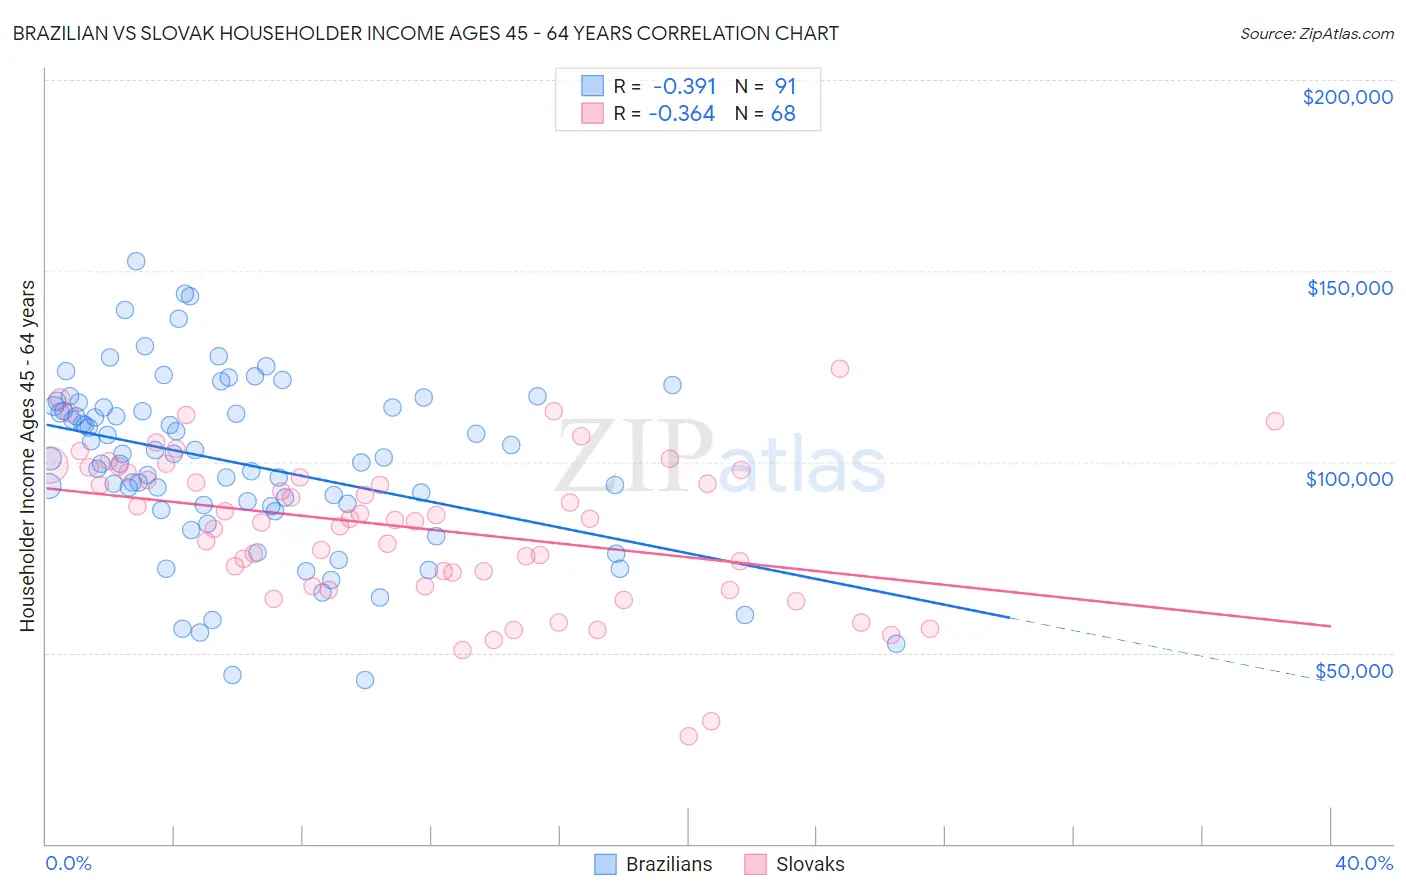 Brazilian vs Slovak Householder Income Ages 45 - 64 years